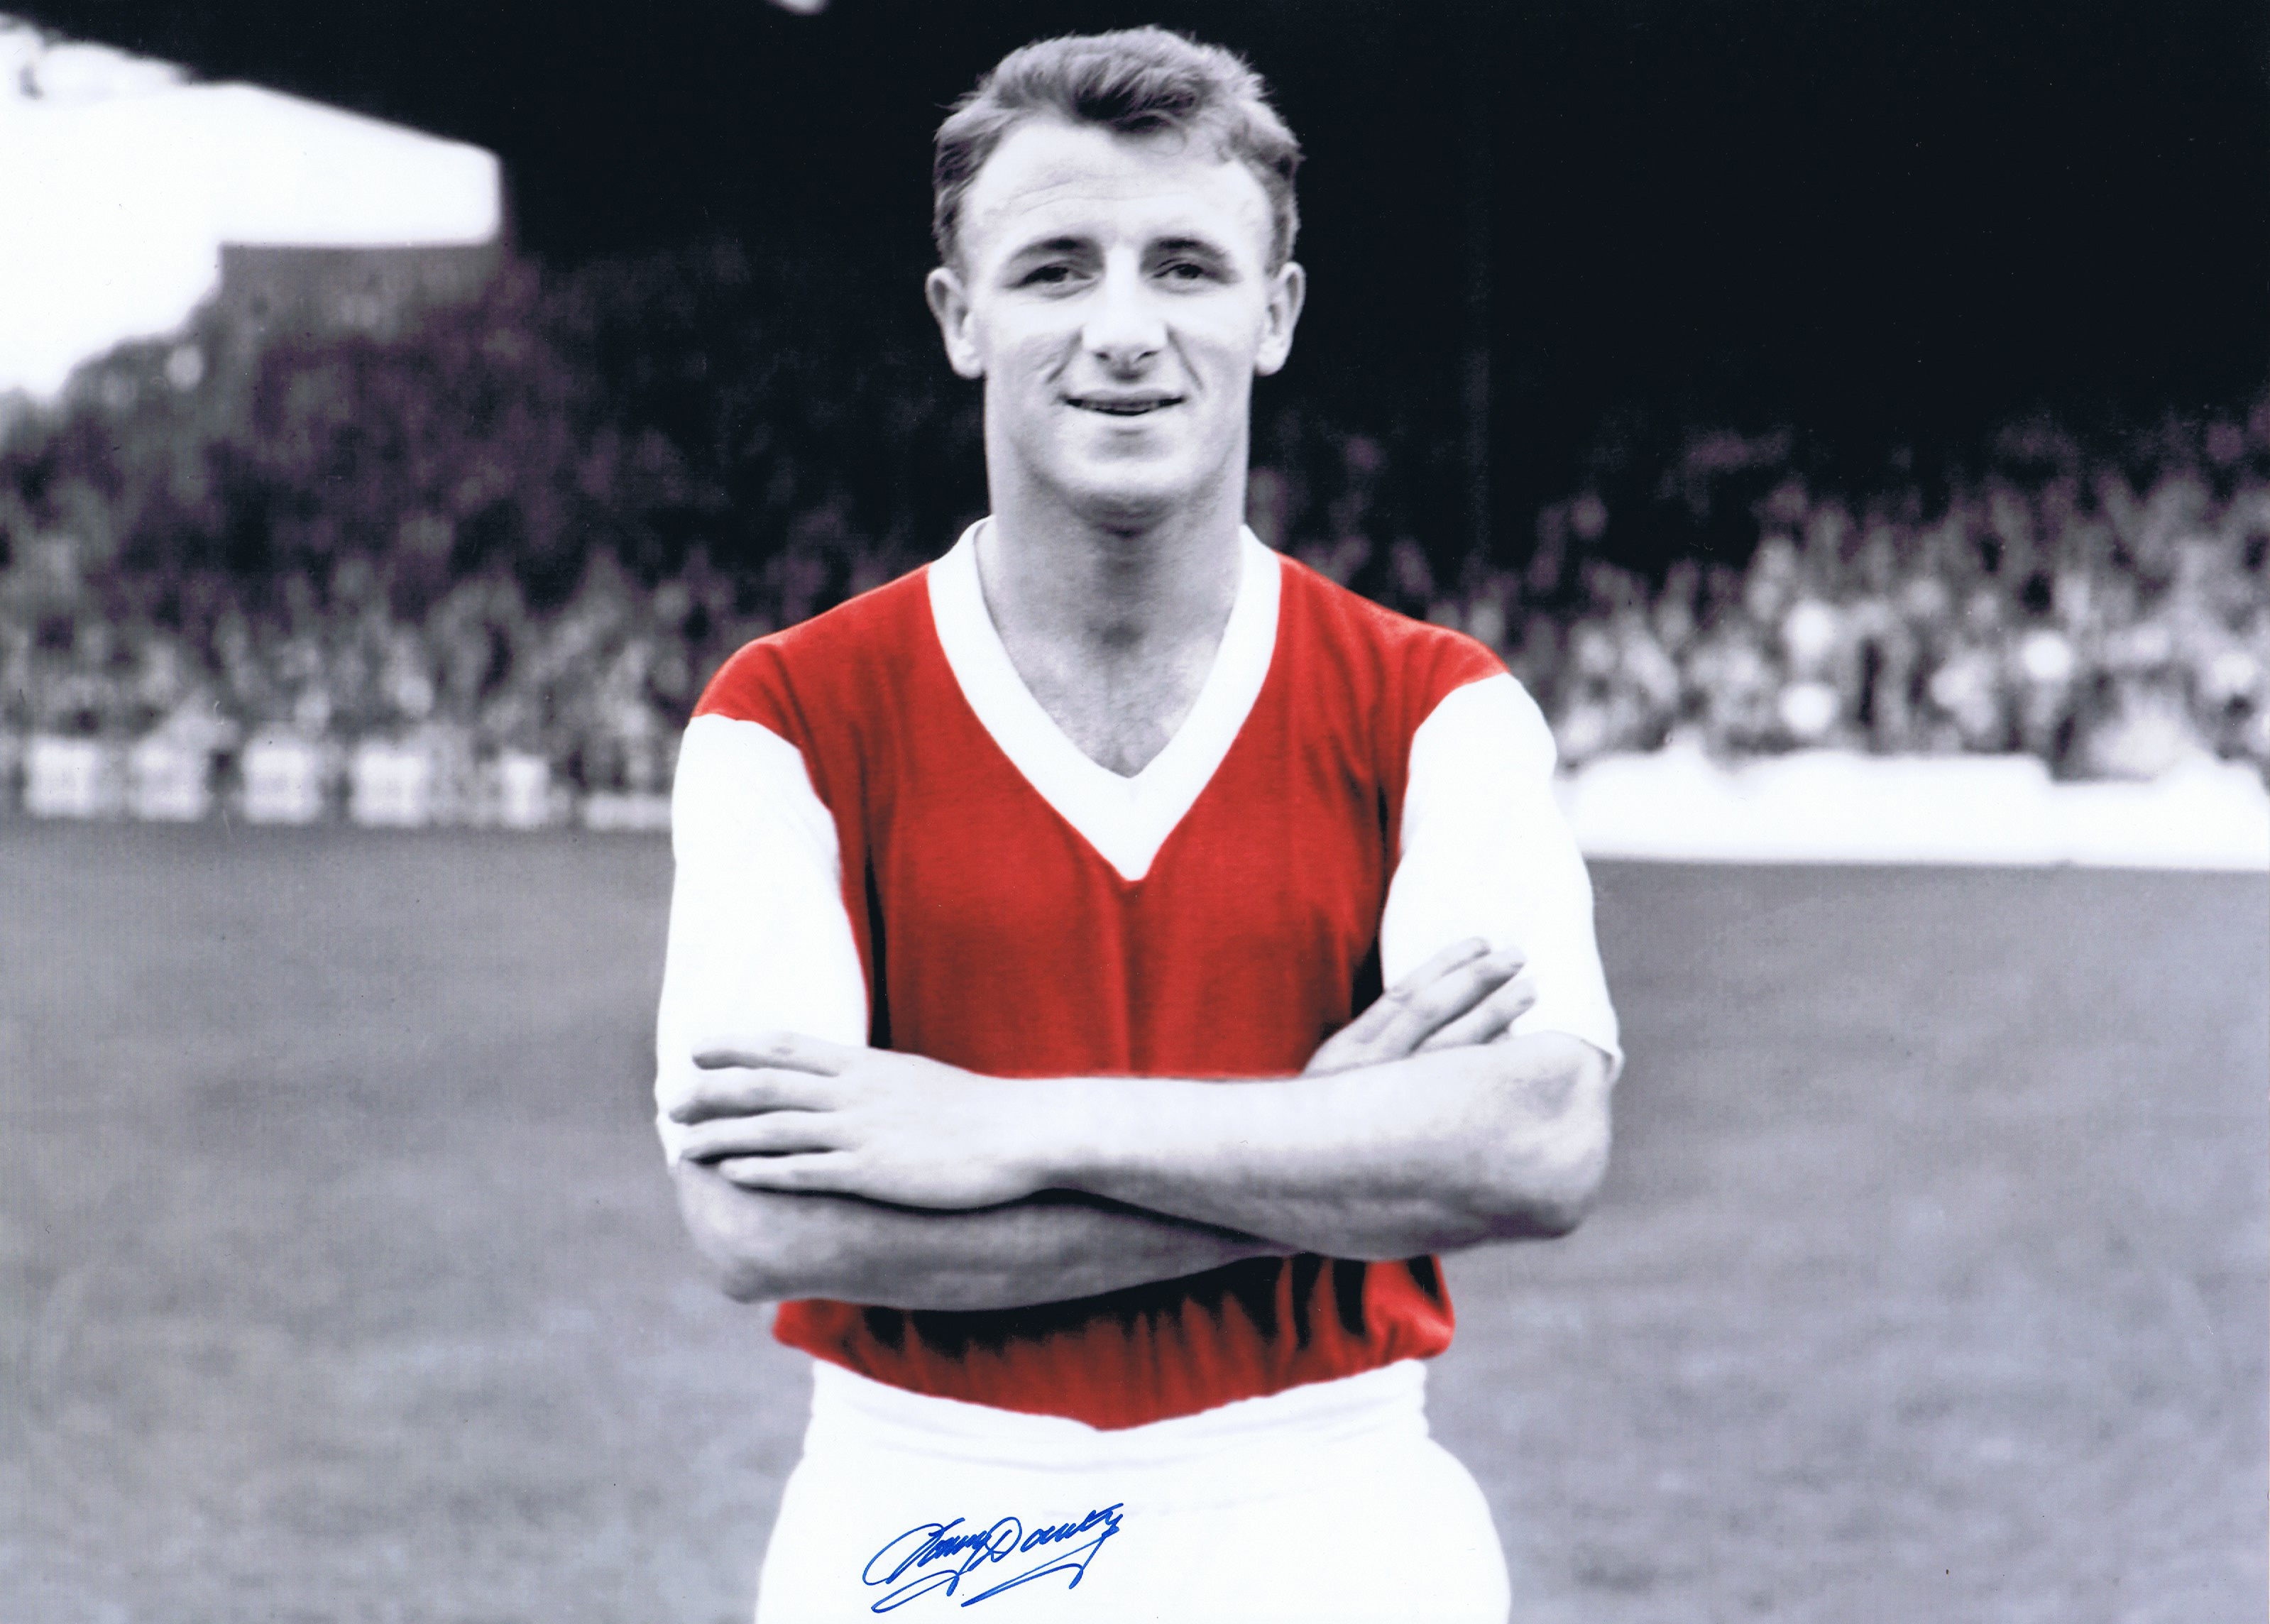 Tommy Docherty 1958: Autographed 16 X 12 Photo, Depicting Arsenal Right-Half Tommy Docherty Posing